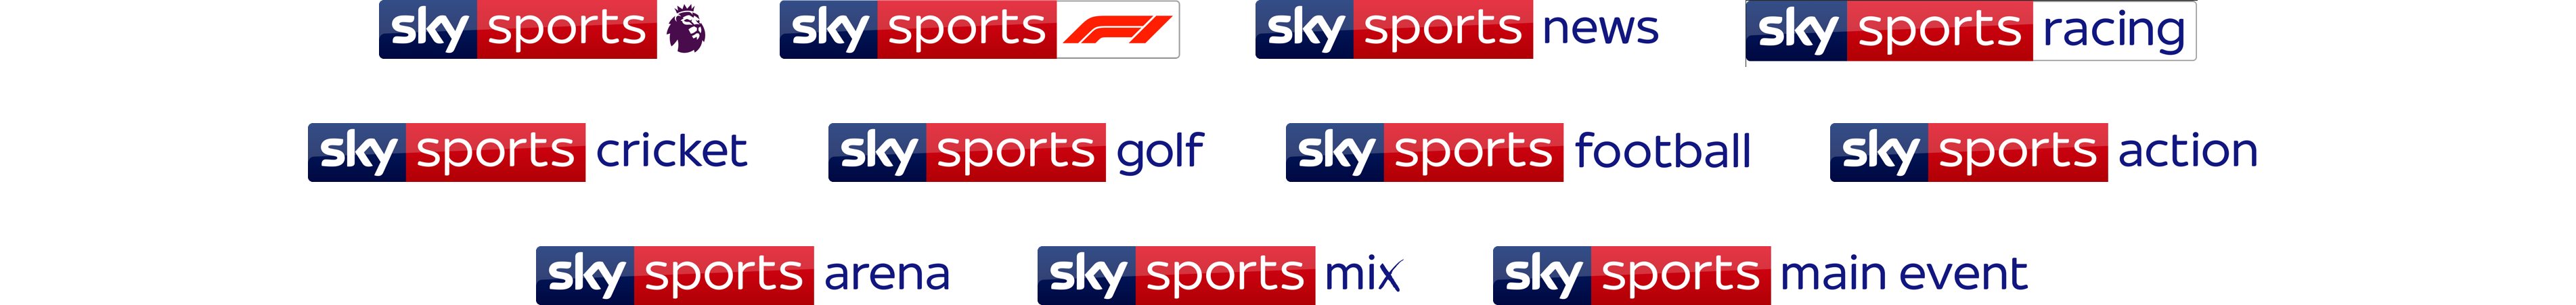 Sky sport live stream. Телеканал Sky Sports News логотип. Sky Sport 24 логотип. Sky Sport collection логотип. Скай Медиа.